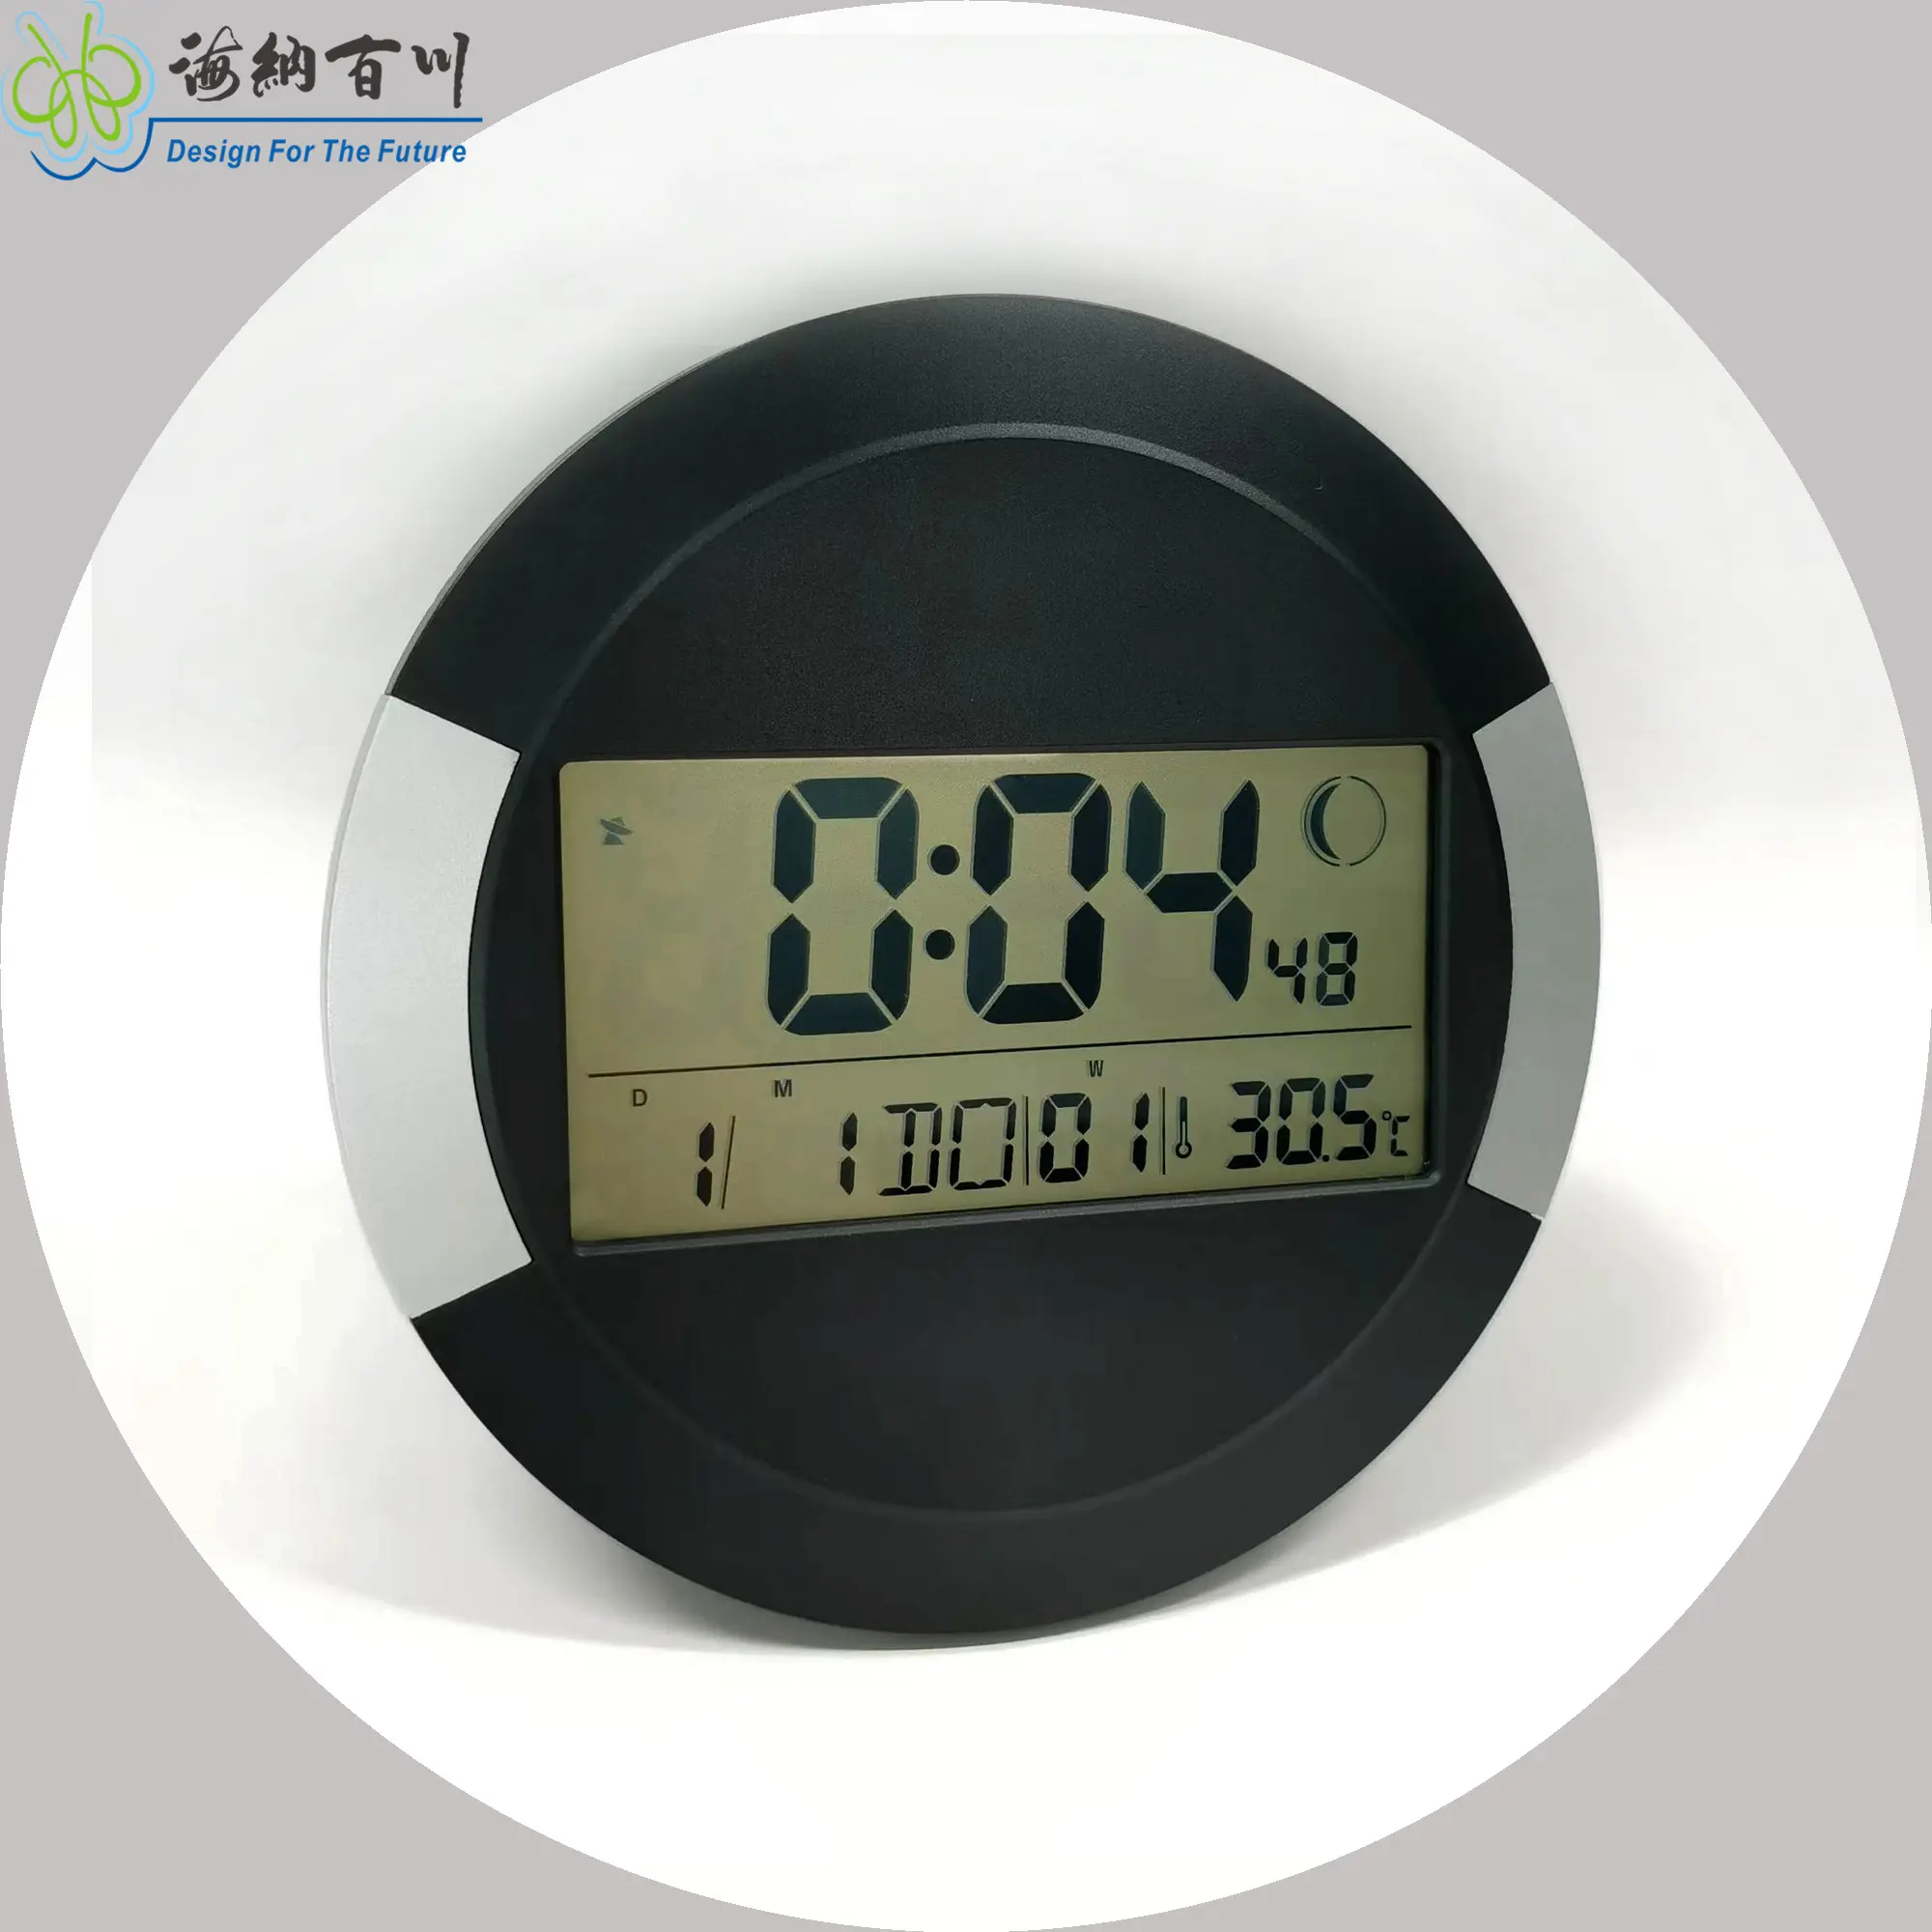 Digital Radio Wall Clock appointed date alarm ascending alarm signal repeat signal temperature display countdown